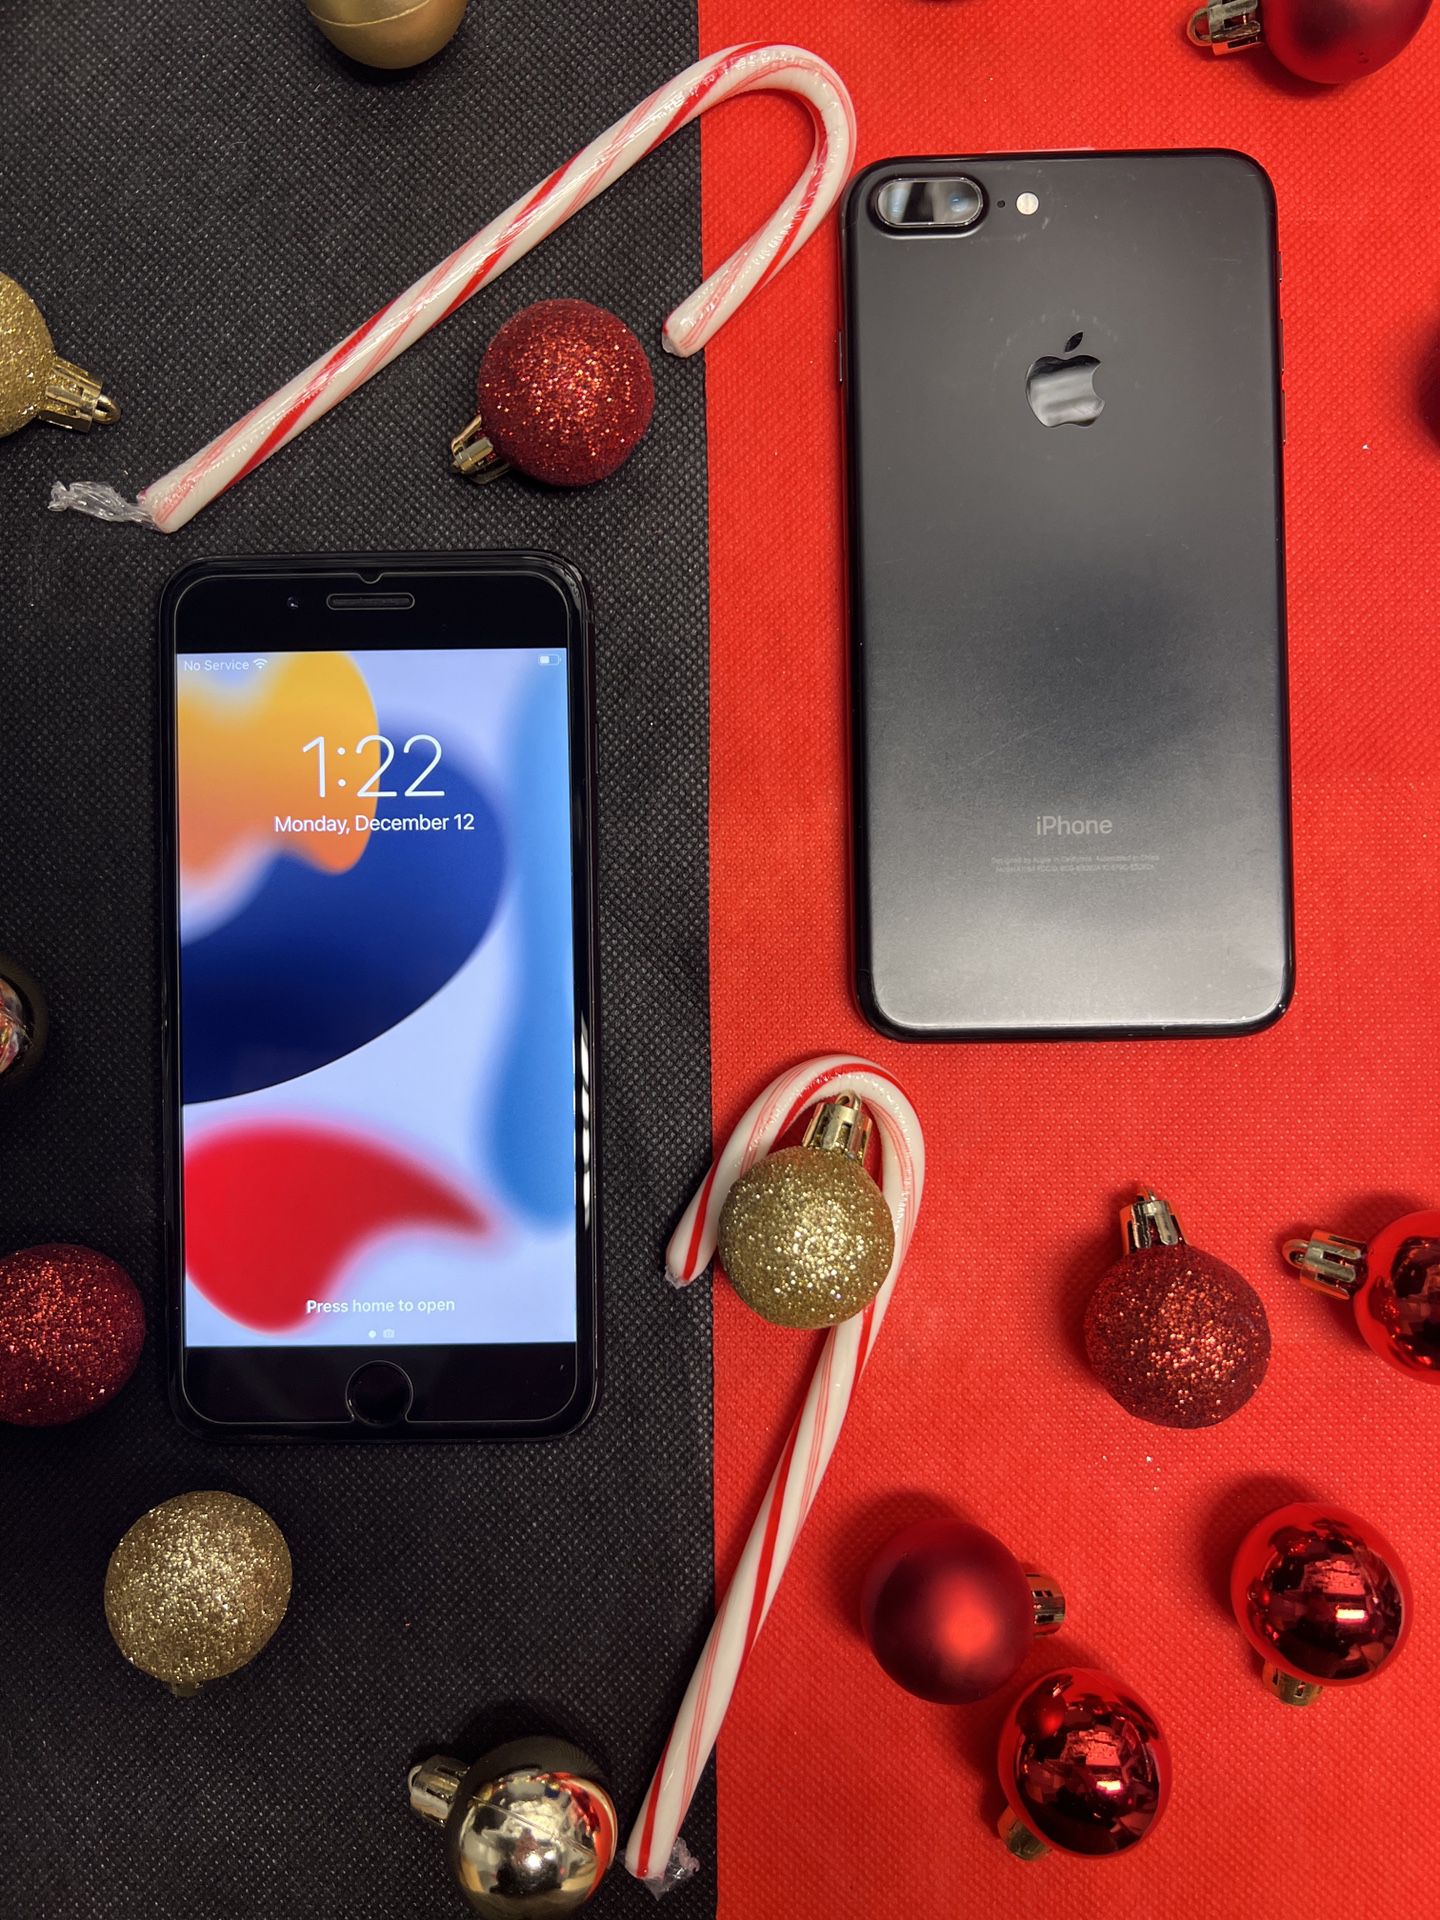 Apple iPhone 7 Plus ~ 32GB ~ Unlocked GSM ~ CHRISTMAS SALE!